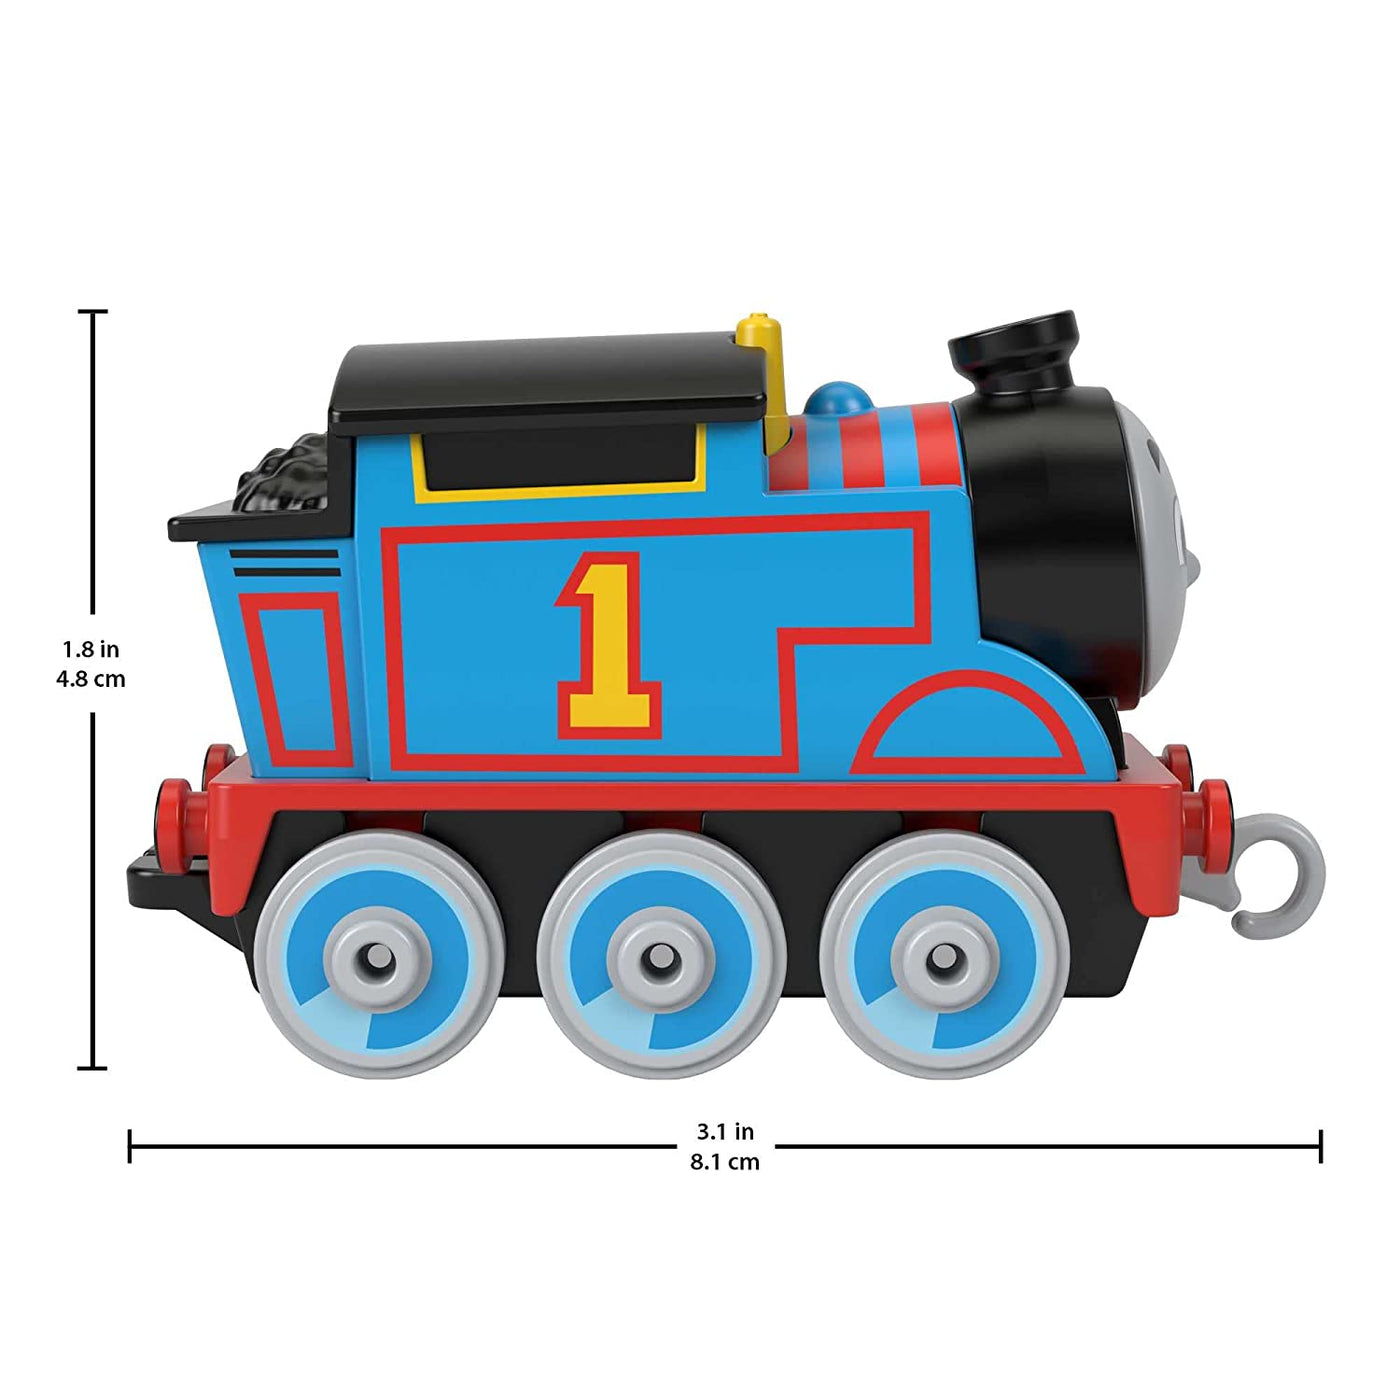 Thomas & Friends Thomas Metal Engine | Fisher Price